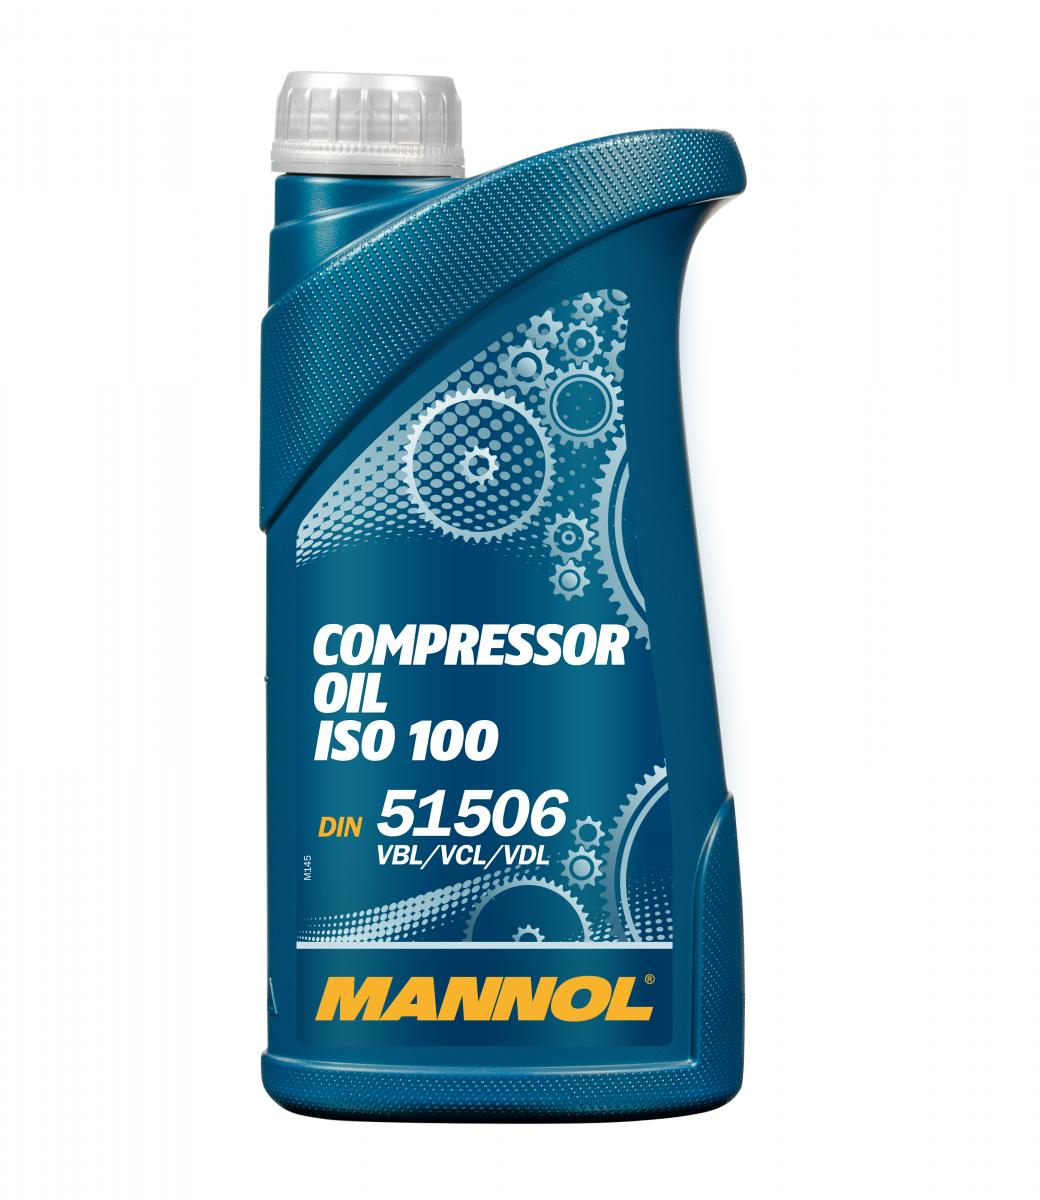 Mannol, Compressor Oil, ISO100, компрессорное масло /DIN 51506/ 1л,